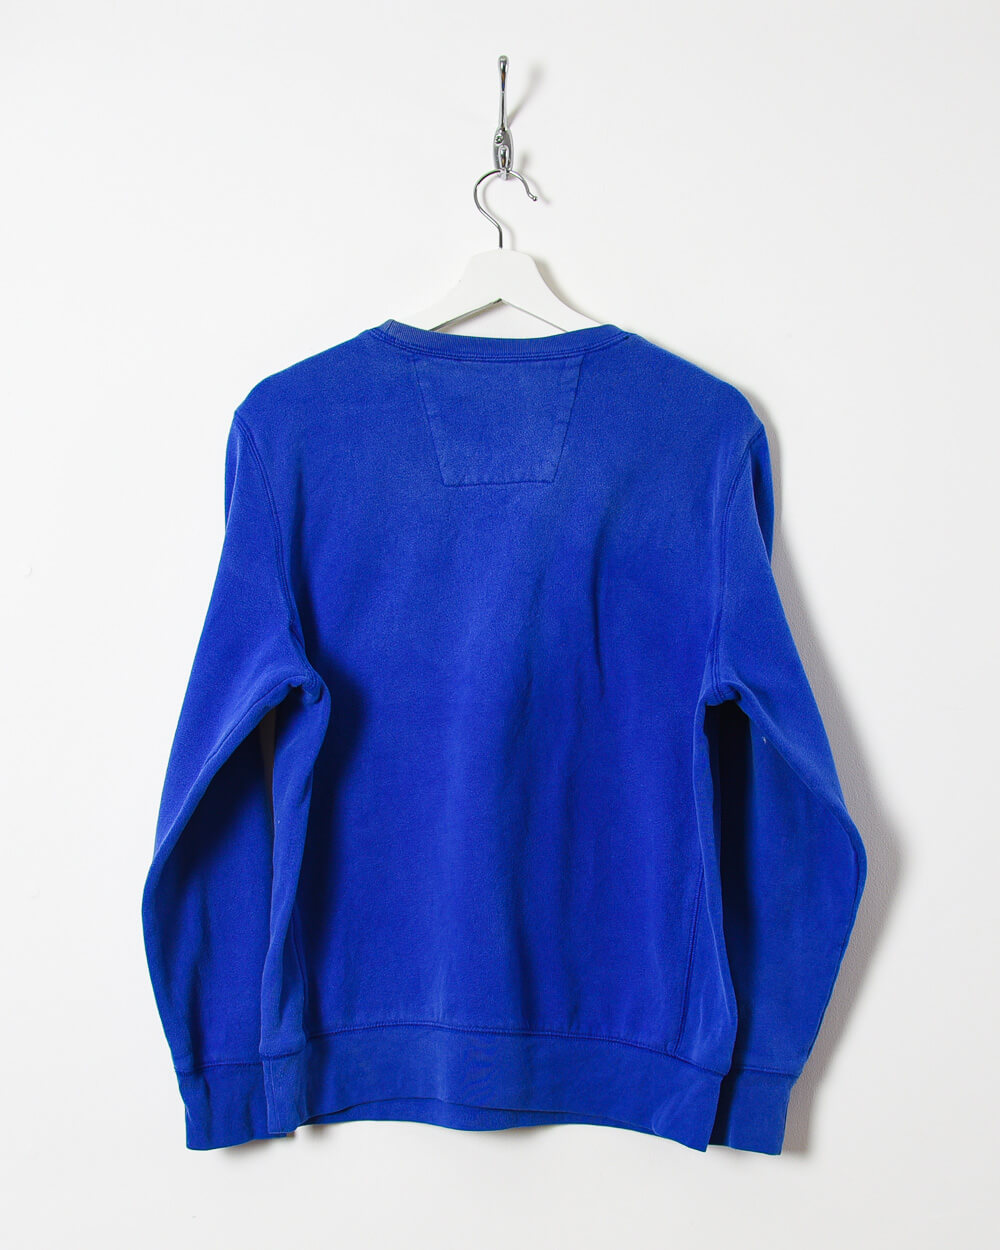 Blue Nautica Sweatshirt - Small